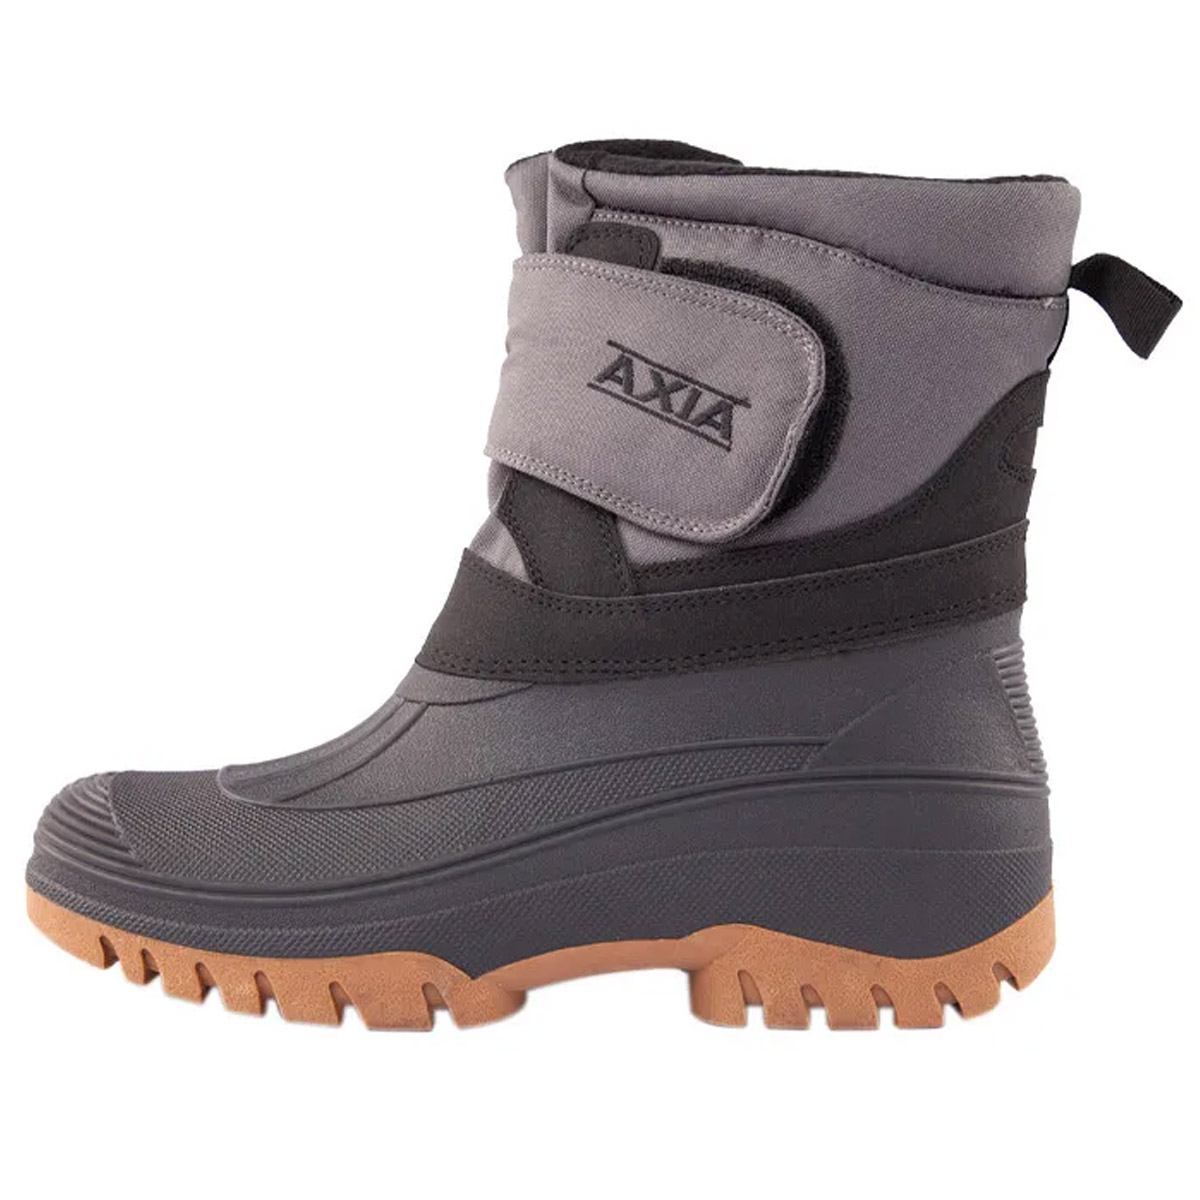 Axia Velcro Boots -  44 -  47 -  39 -  43